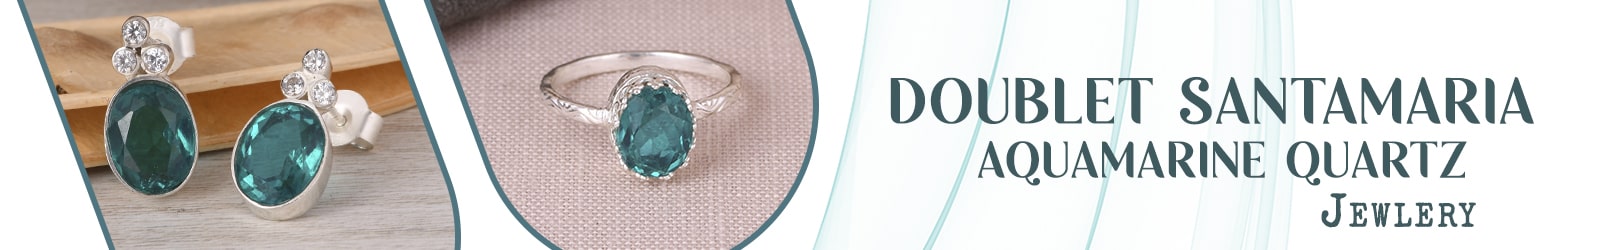 Silver Doublet Santamaria Aquamarine Quartz Jewelry Wholesale Supplier